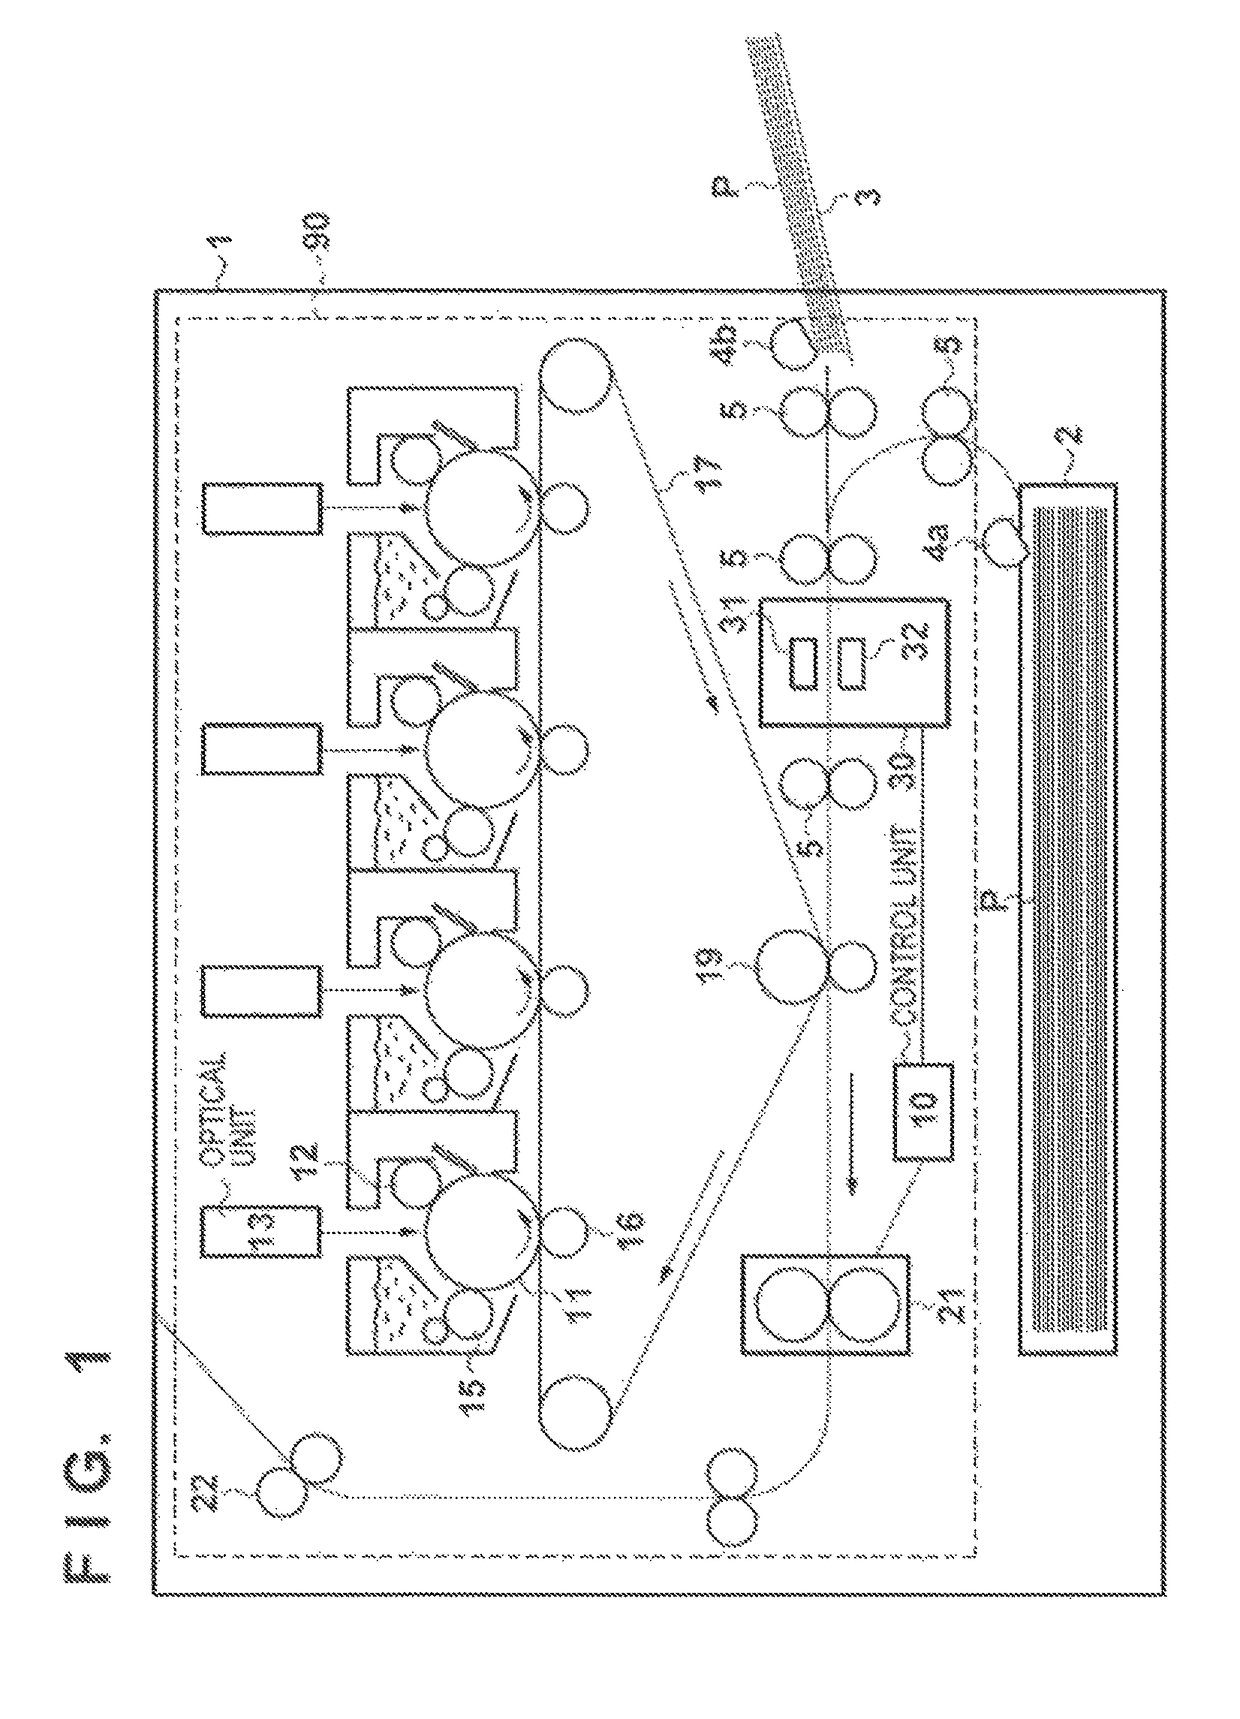 Sheet determination apparatus using ultrasonic wave transmitting unit or reception unit